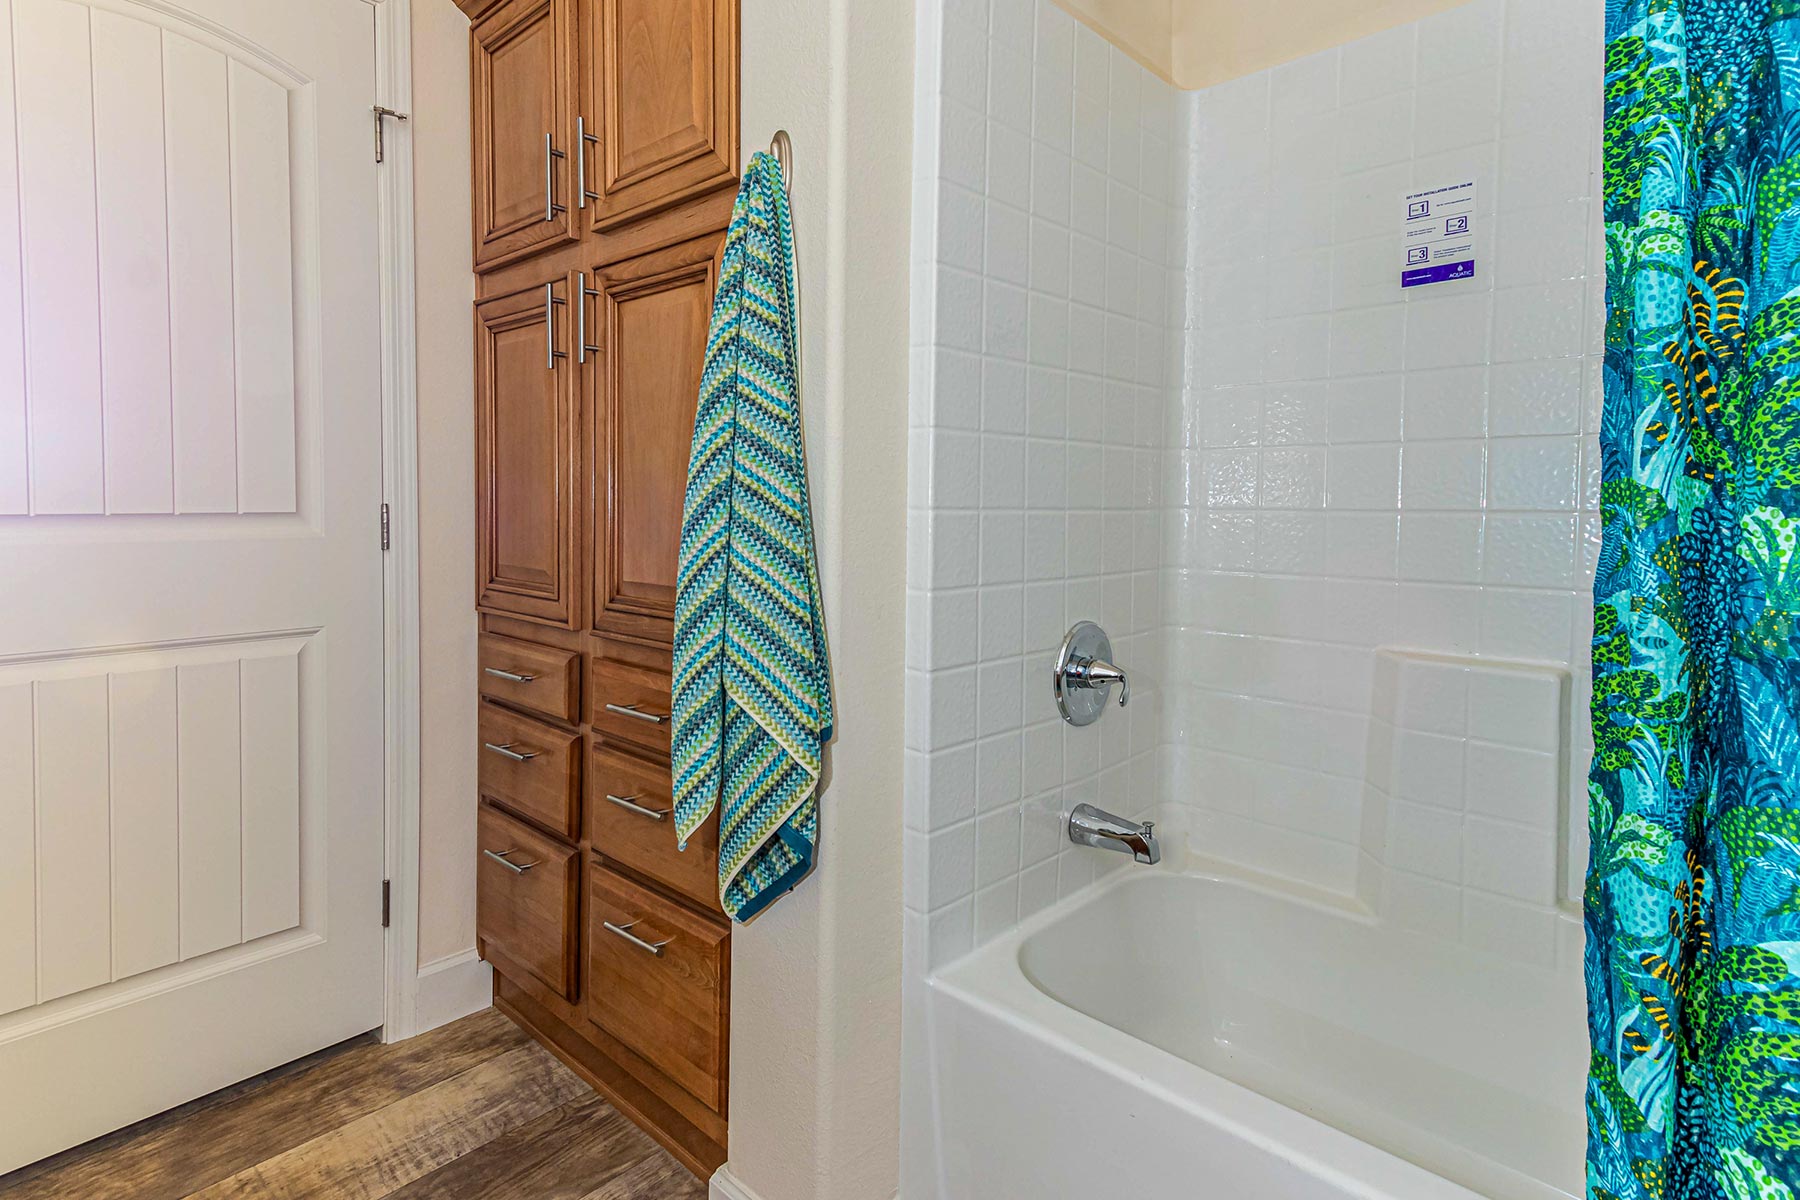 Skyline Homes Westridge 1473CT Manufactured Home Second bathroom featuring single vanity, shower bath, linen cabinet, toilet